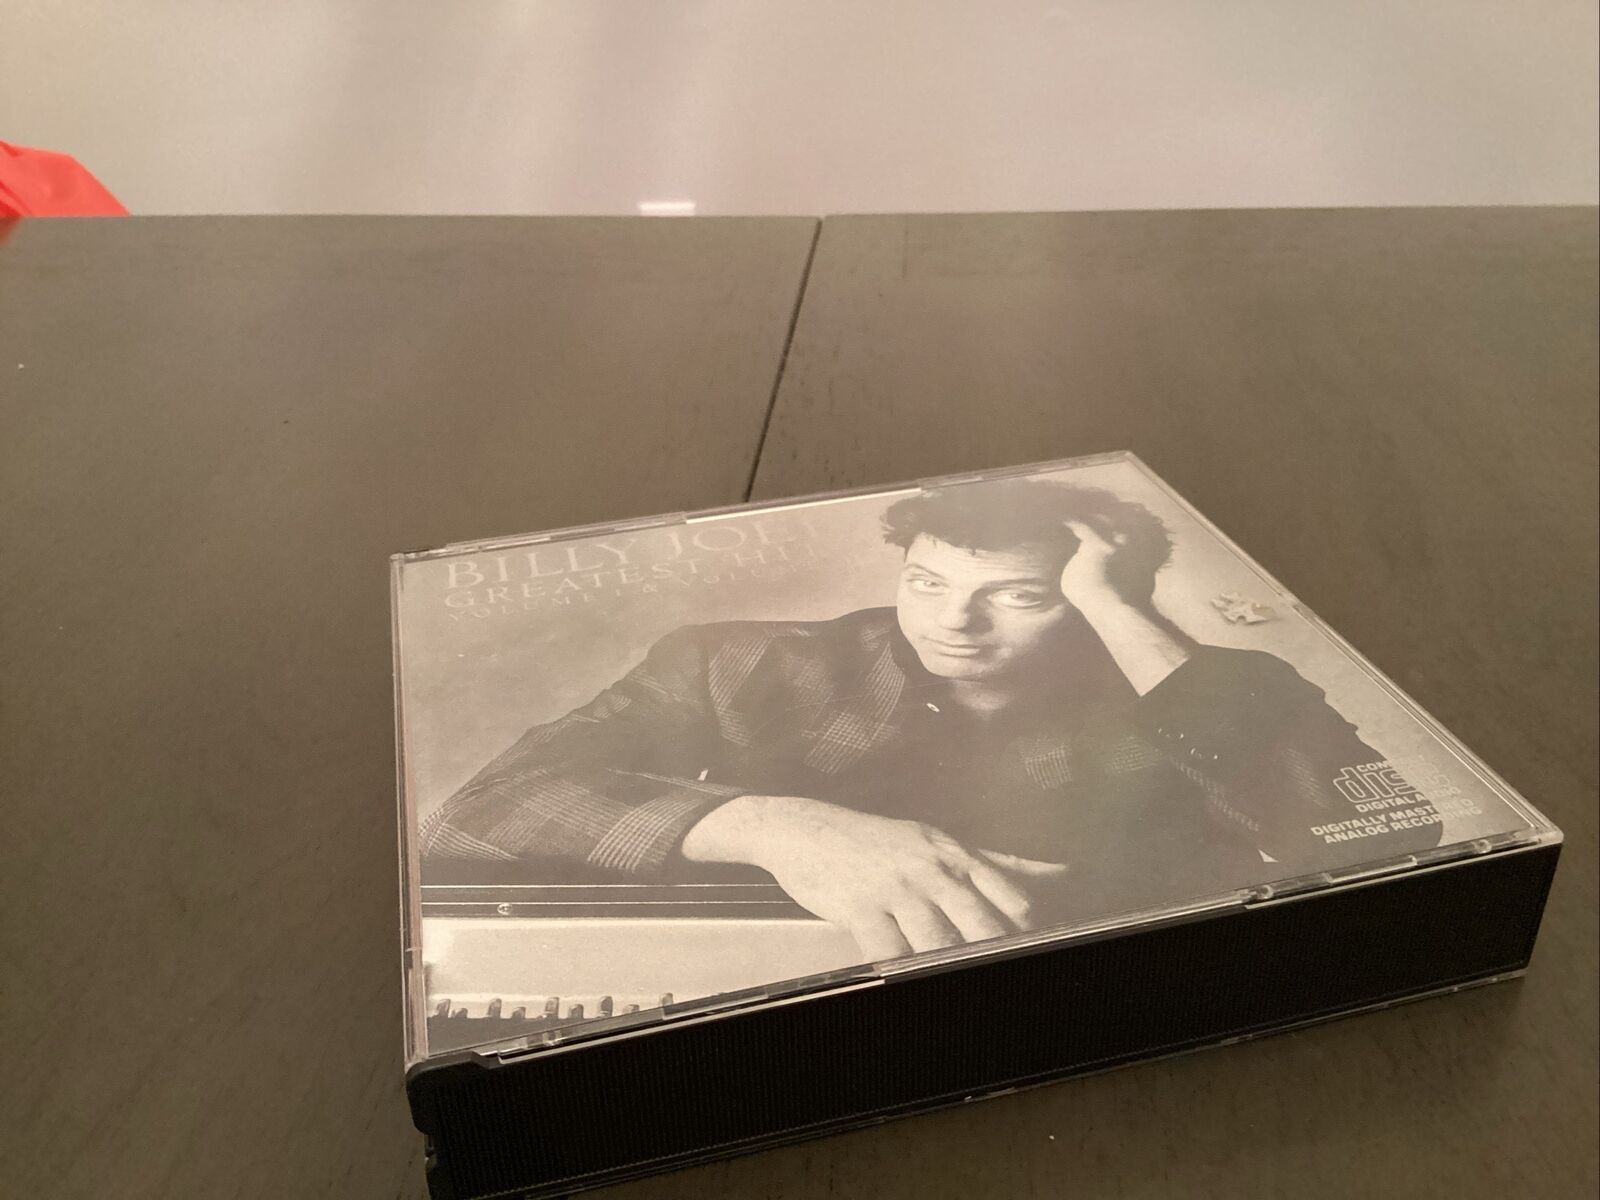 Greatest Hits Vols. 1 & 2 [CD] Billy Joel. LIKE NEW. MINT DISC.